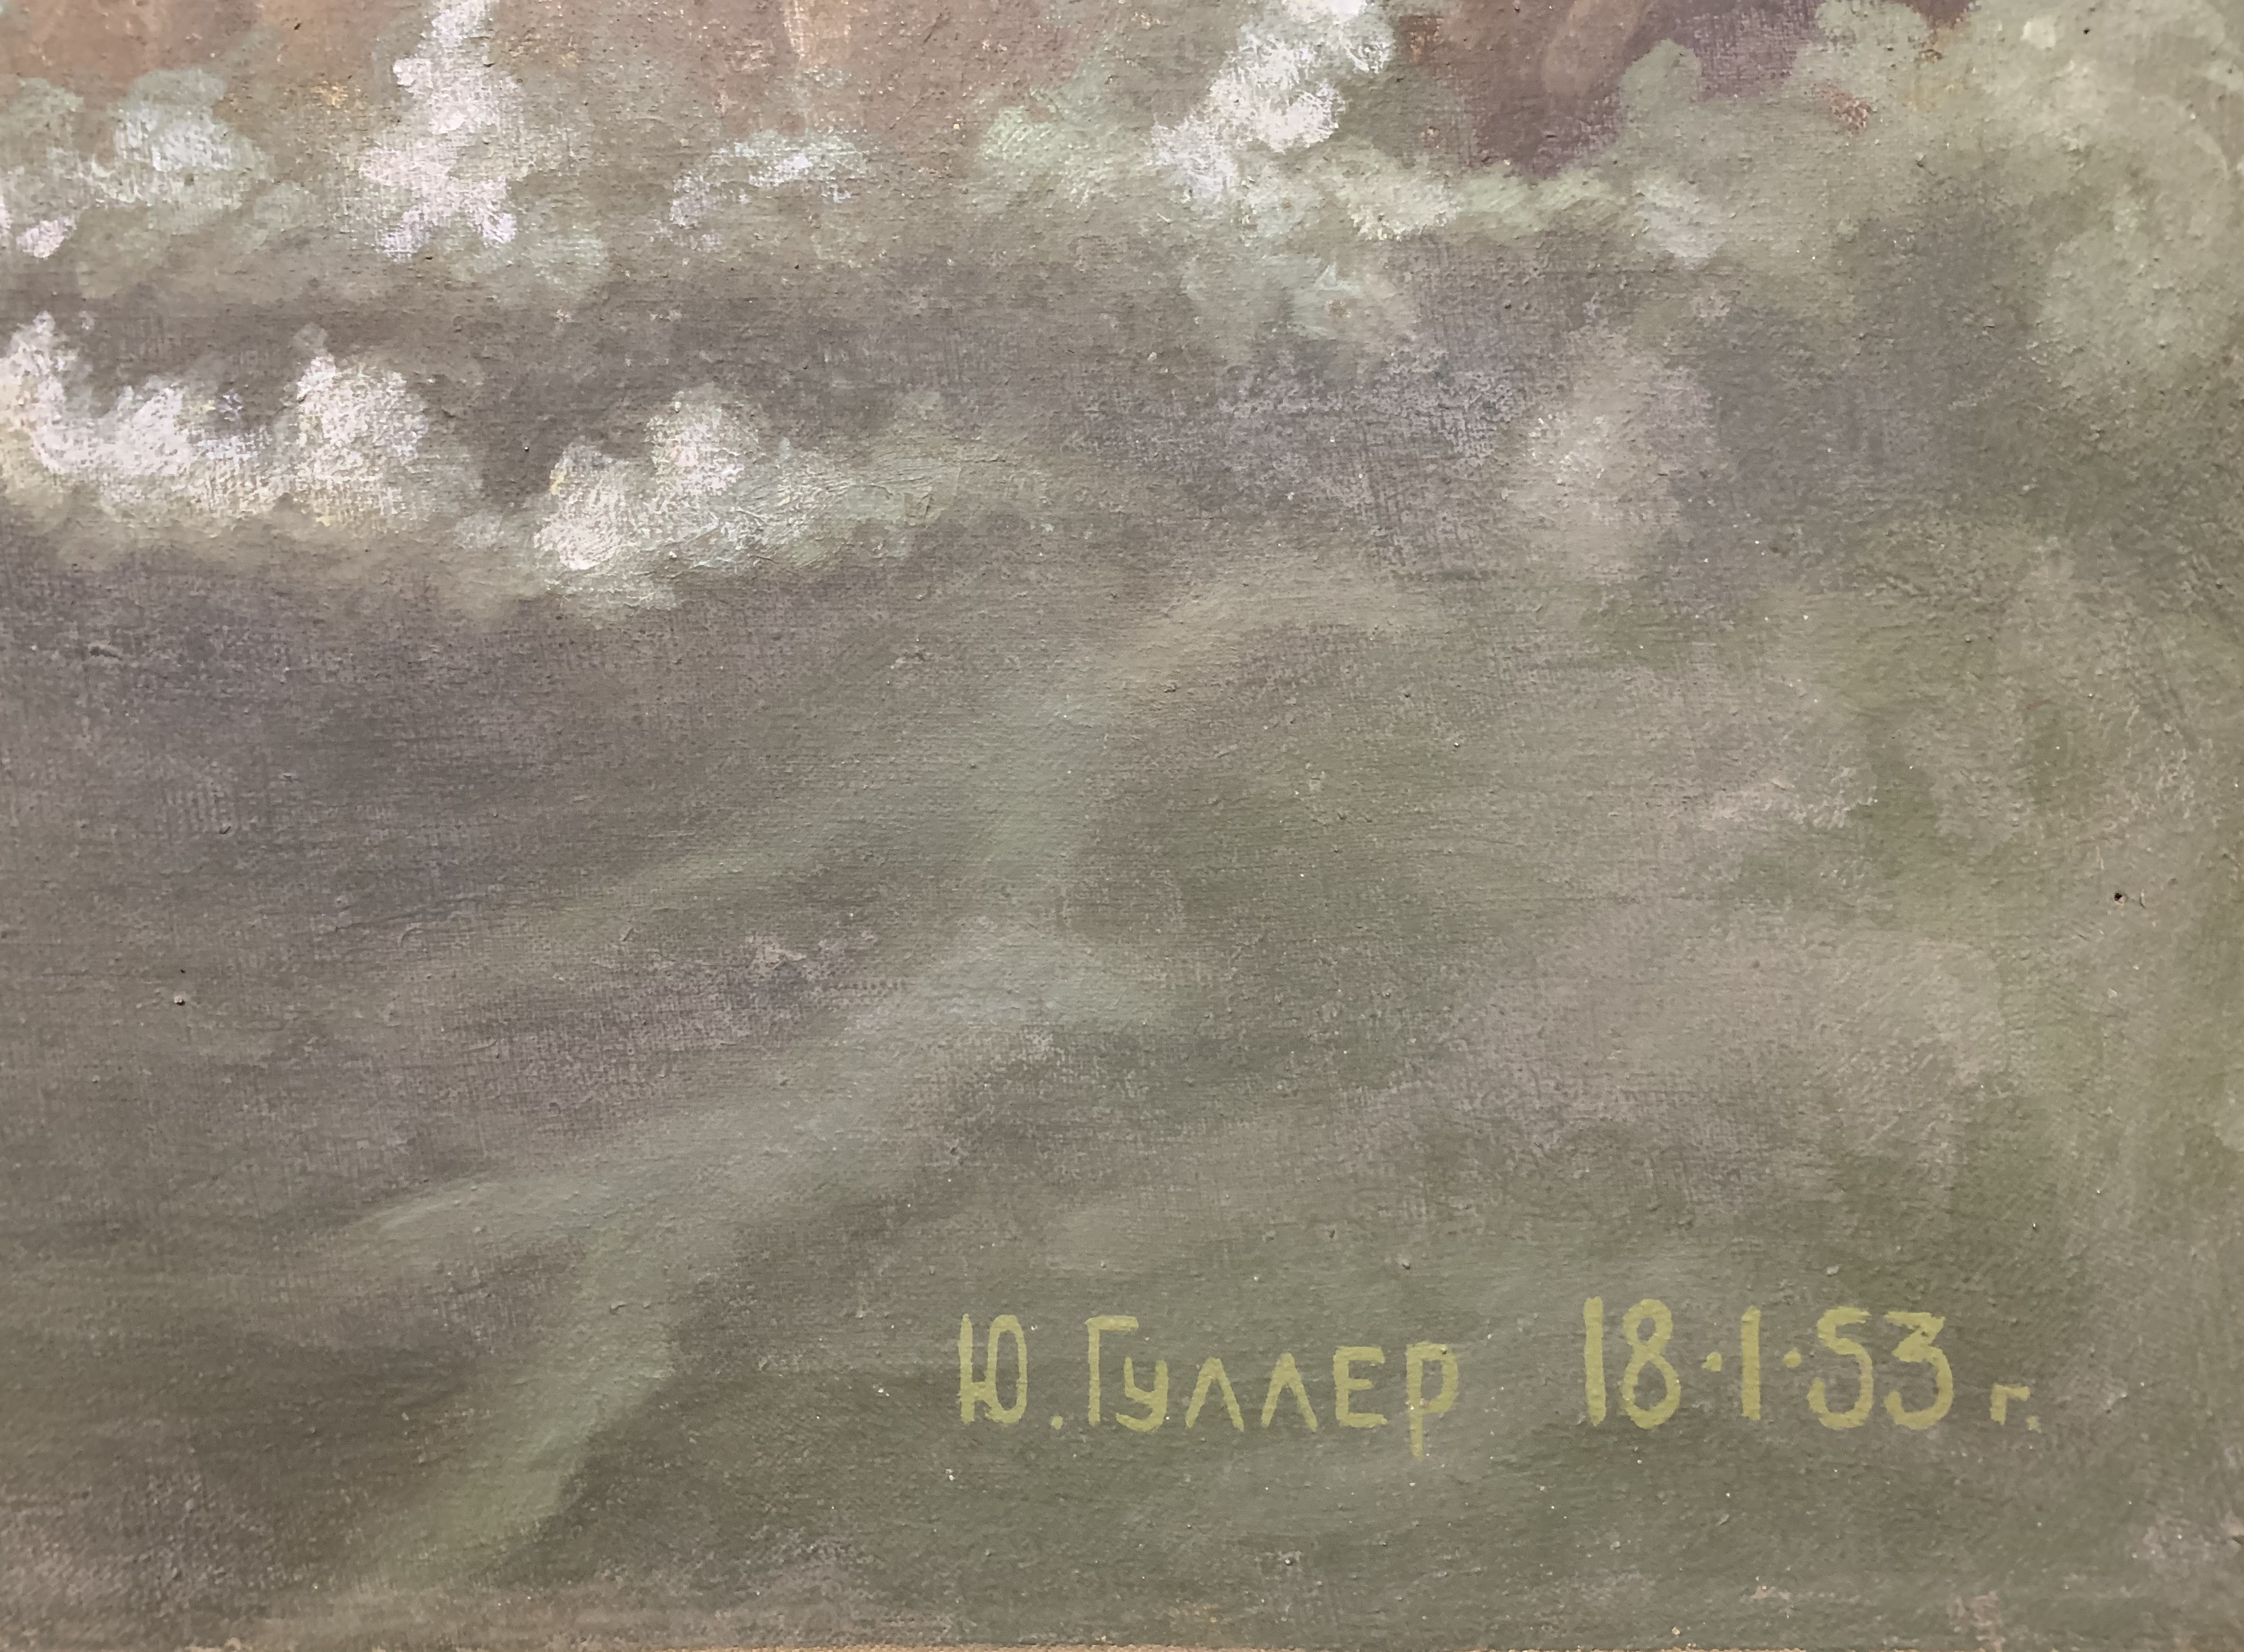 Гуллер Ю. Буря в море, как стол,холст, масло 1953  - 2